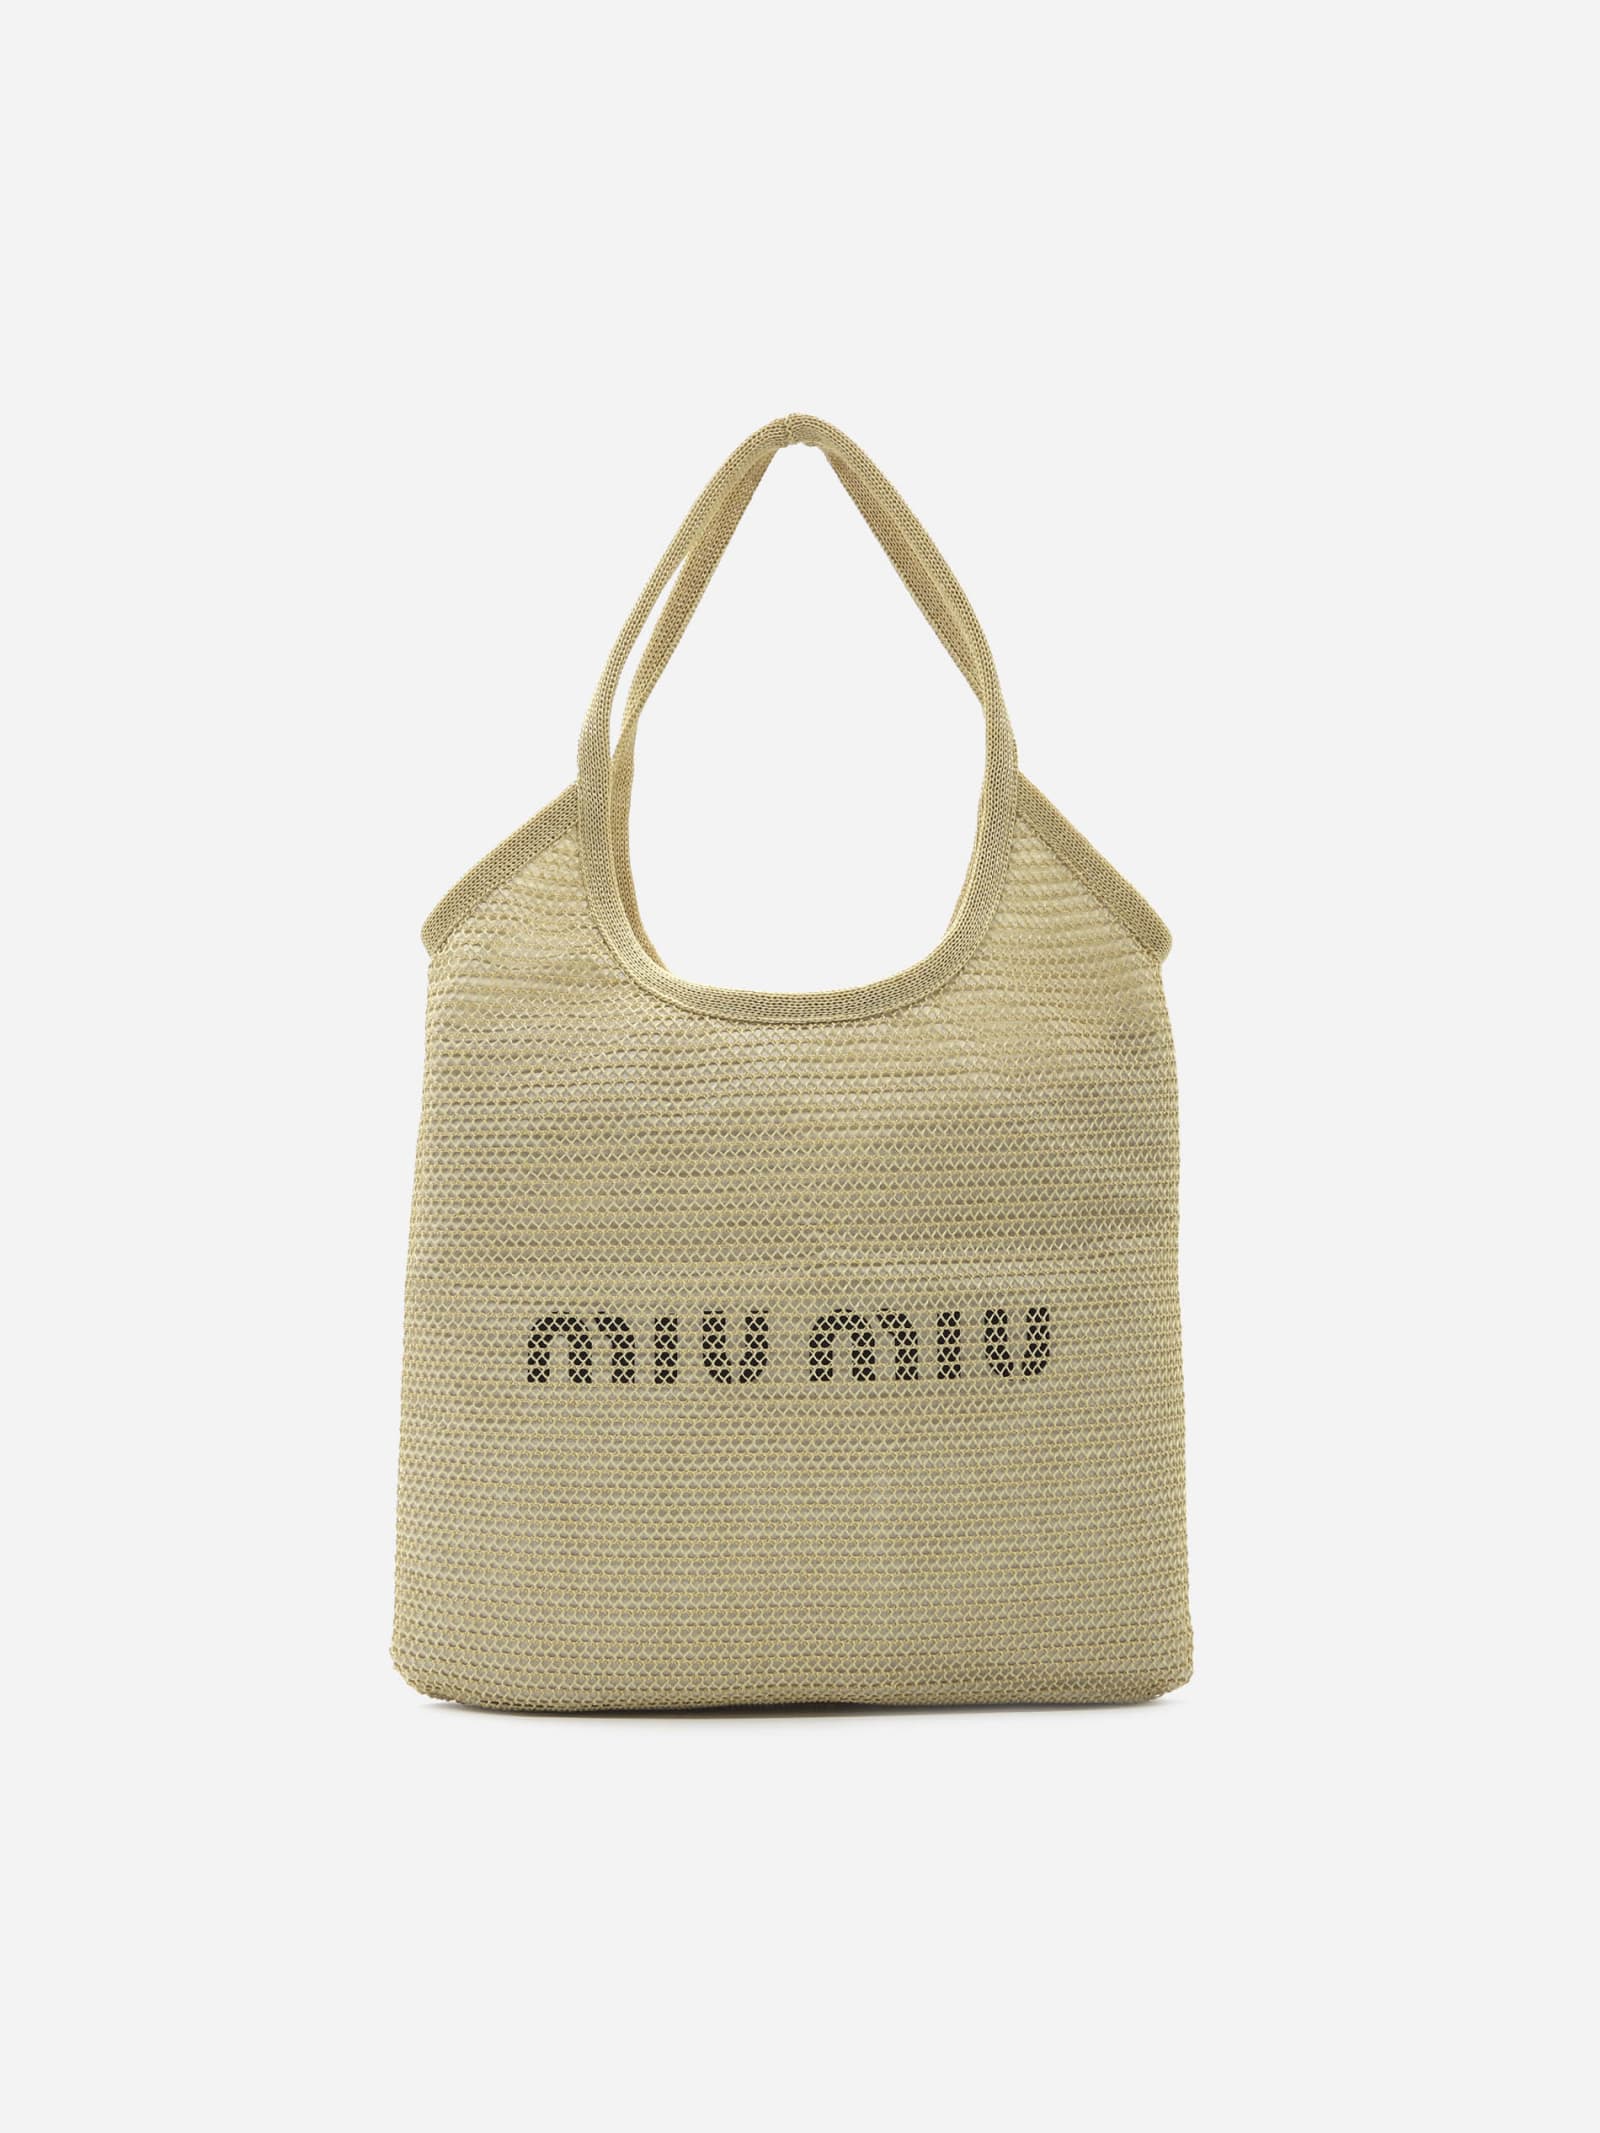 Miu Miu Tote Bag In Woven Raffia With Logo Print